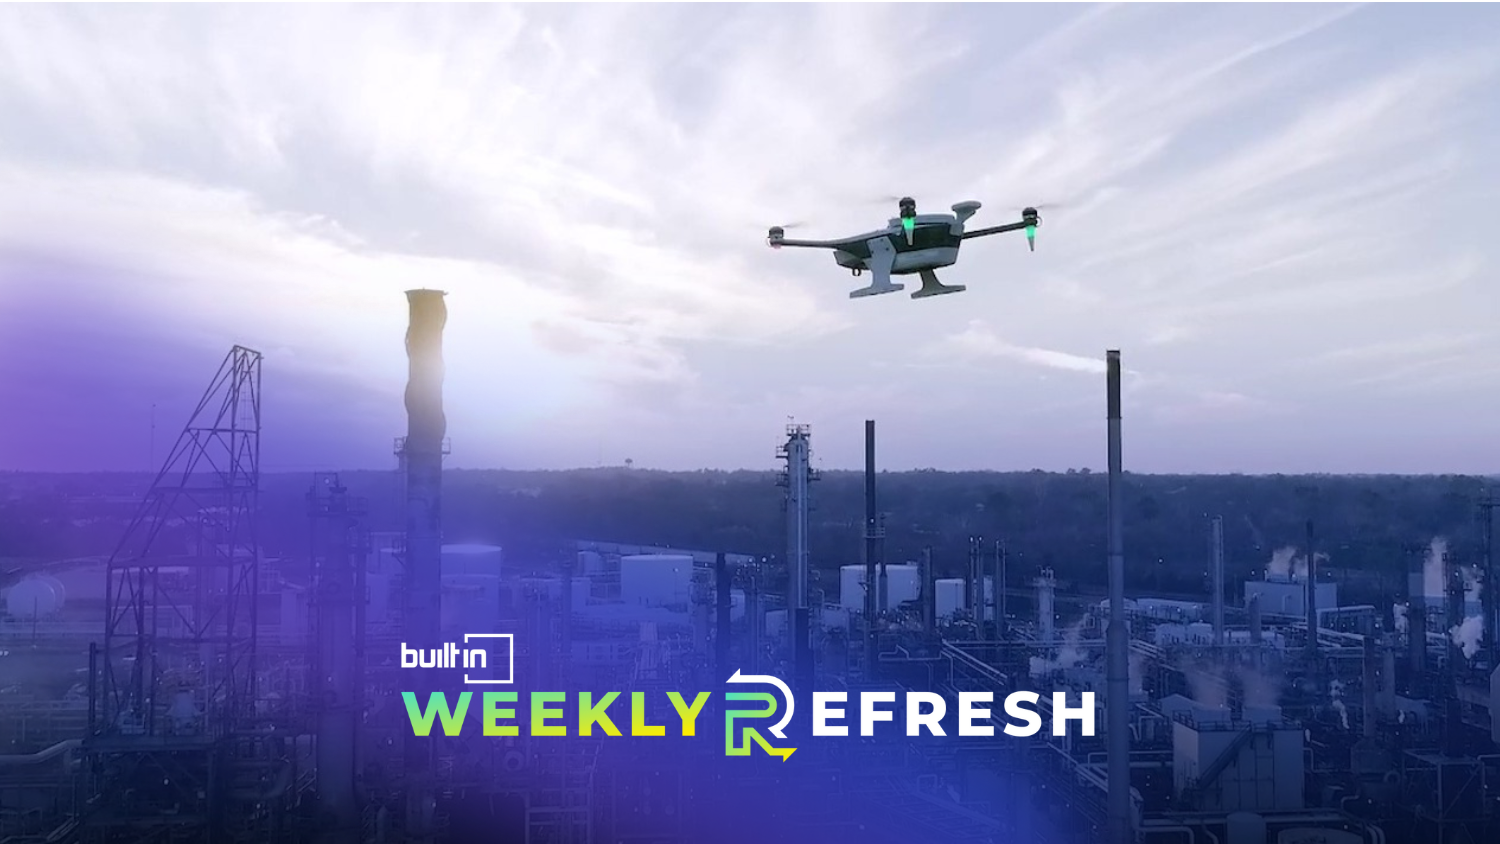 A percepto drone flies above a city. 